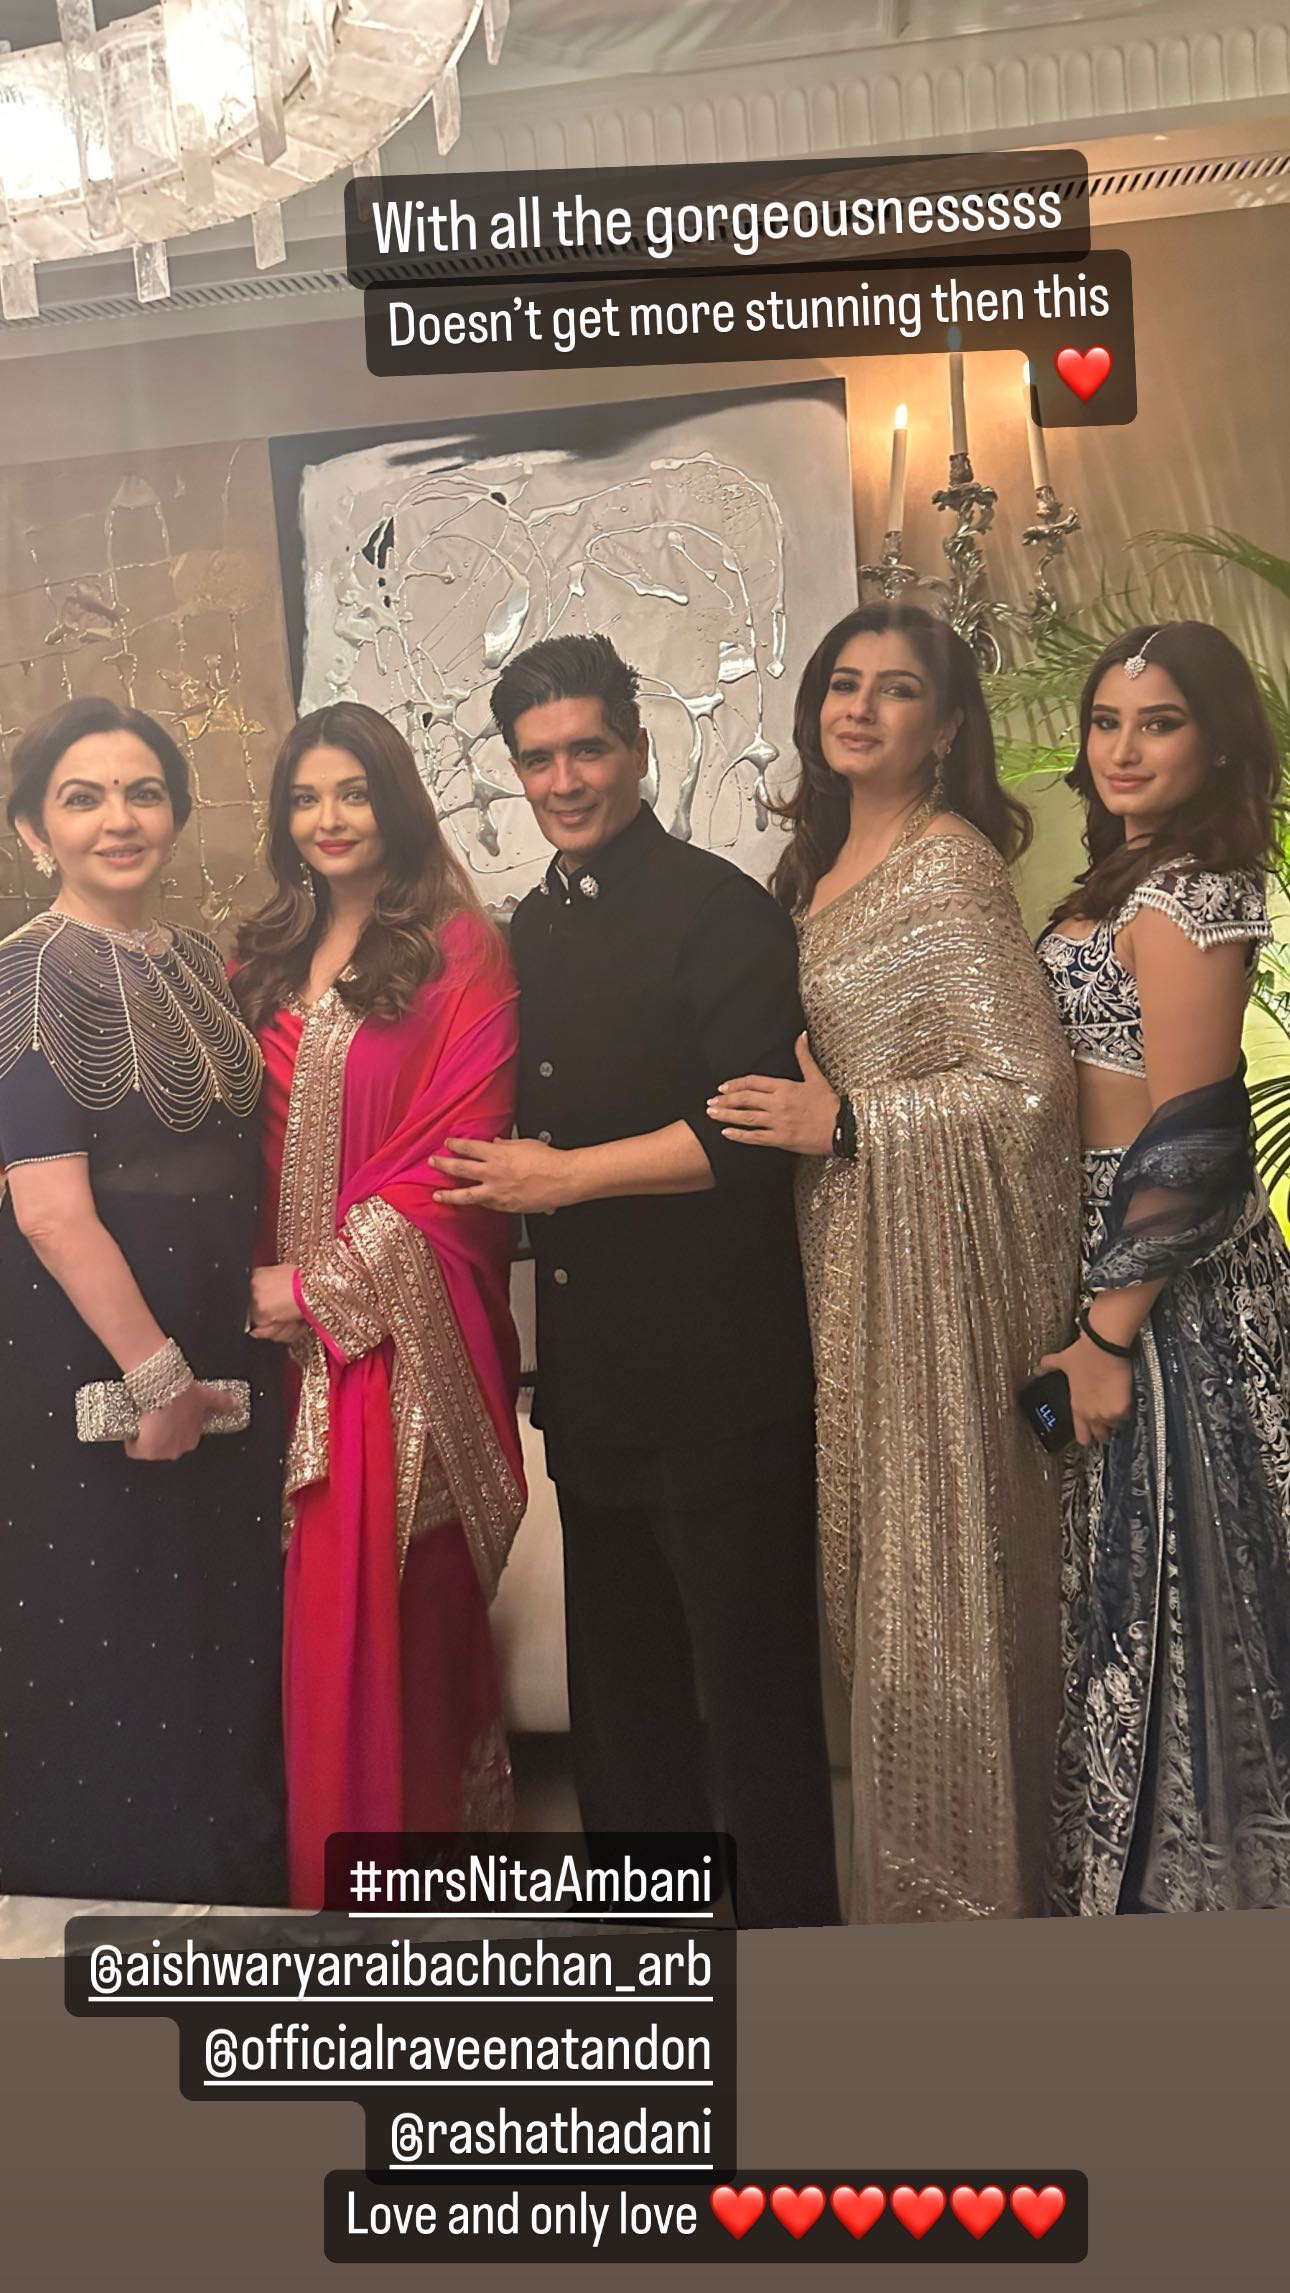 Manish Malhotra poses with Aishwarya Rai Bachchan and Raveena Tandon